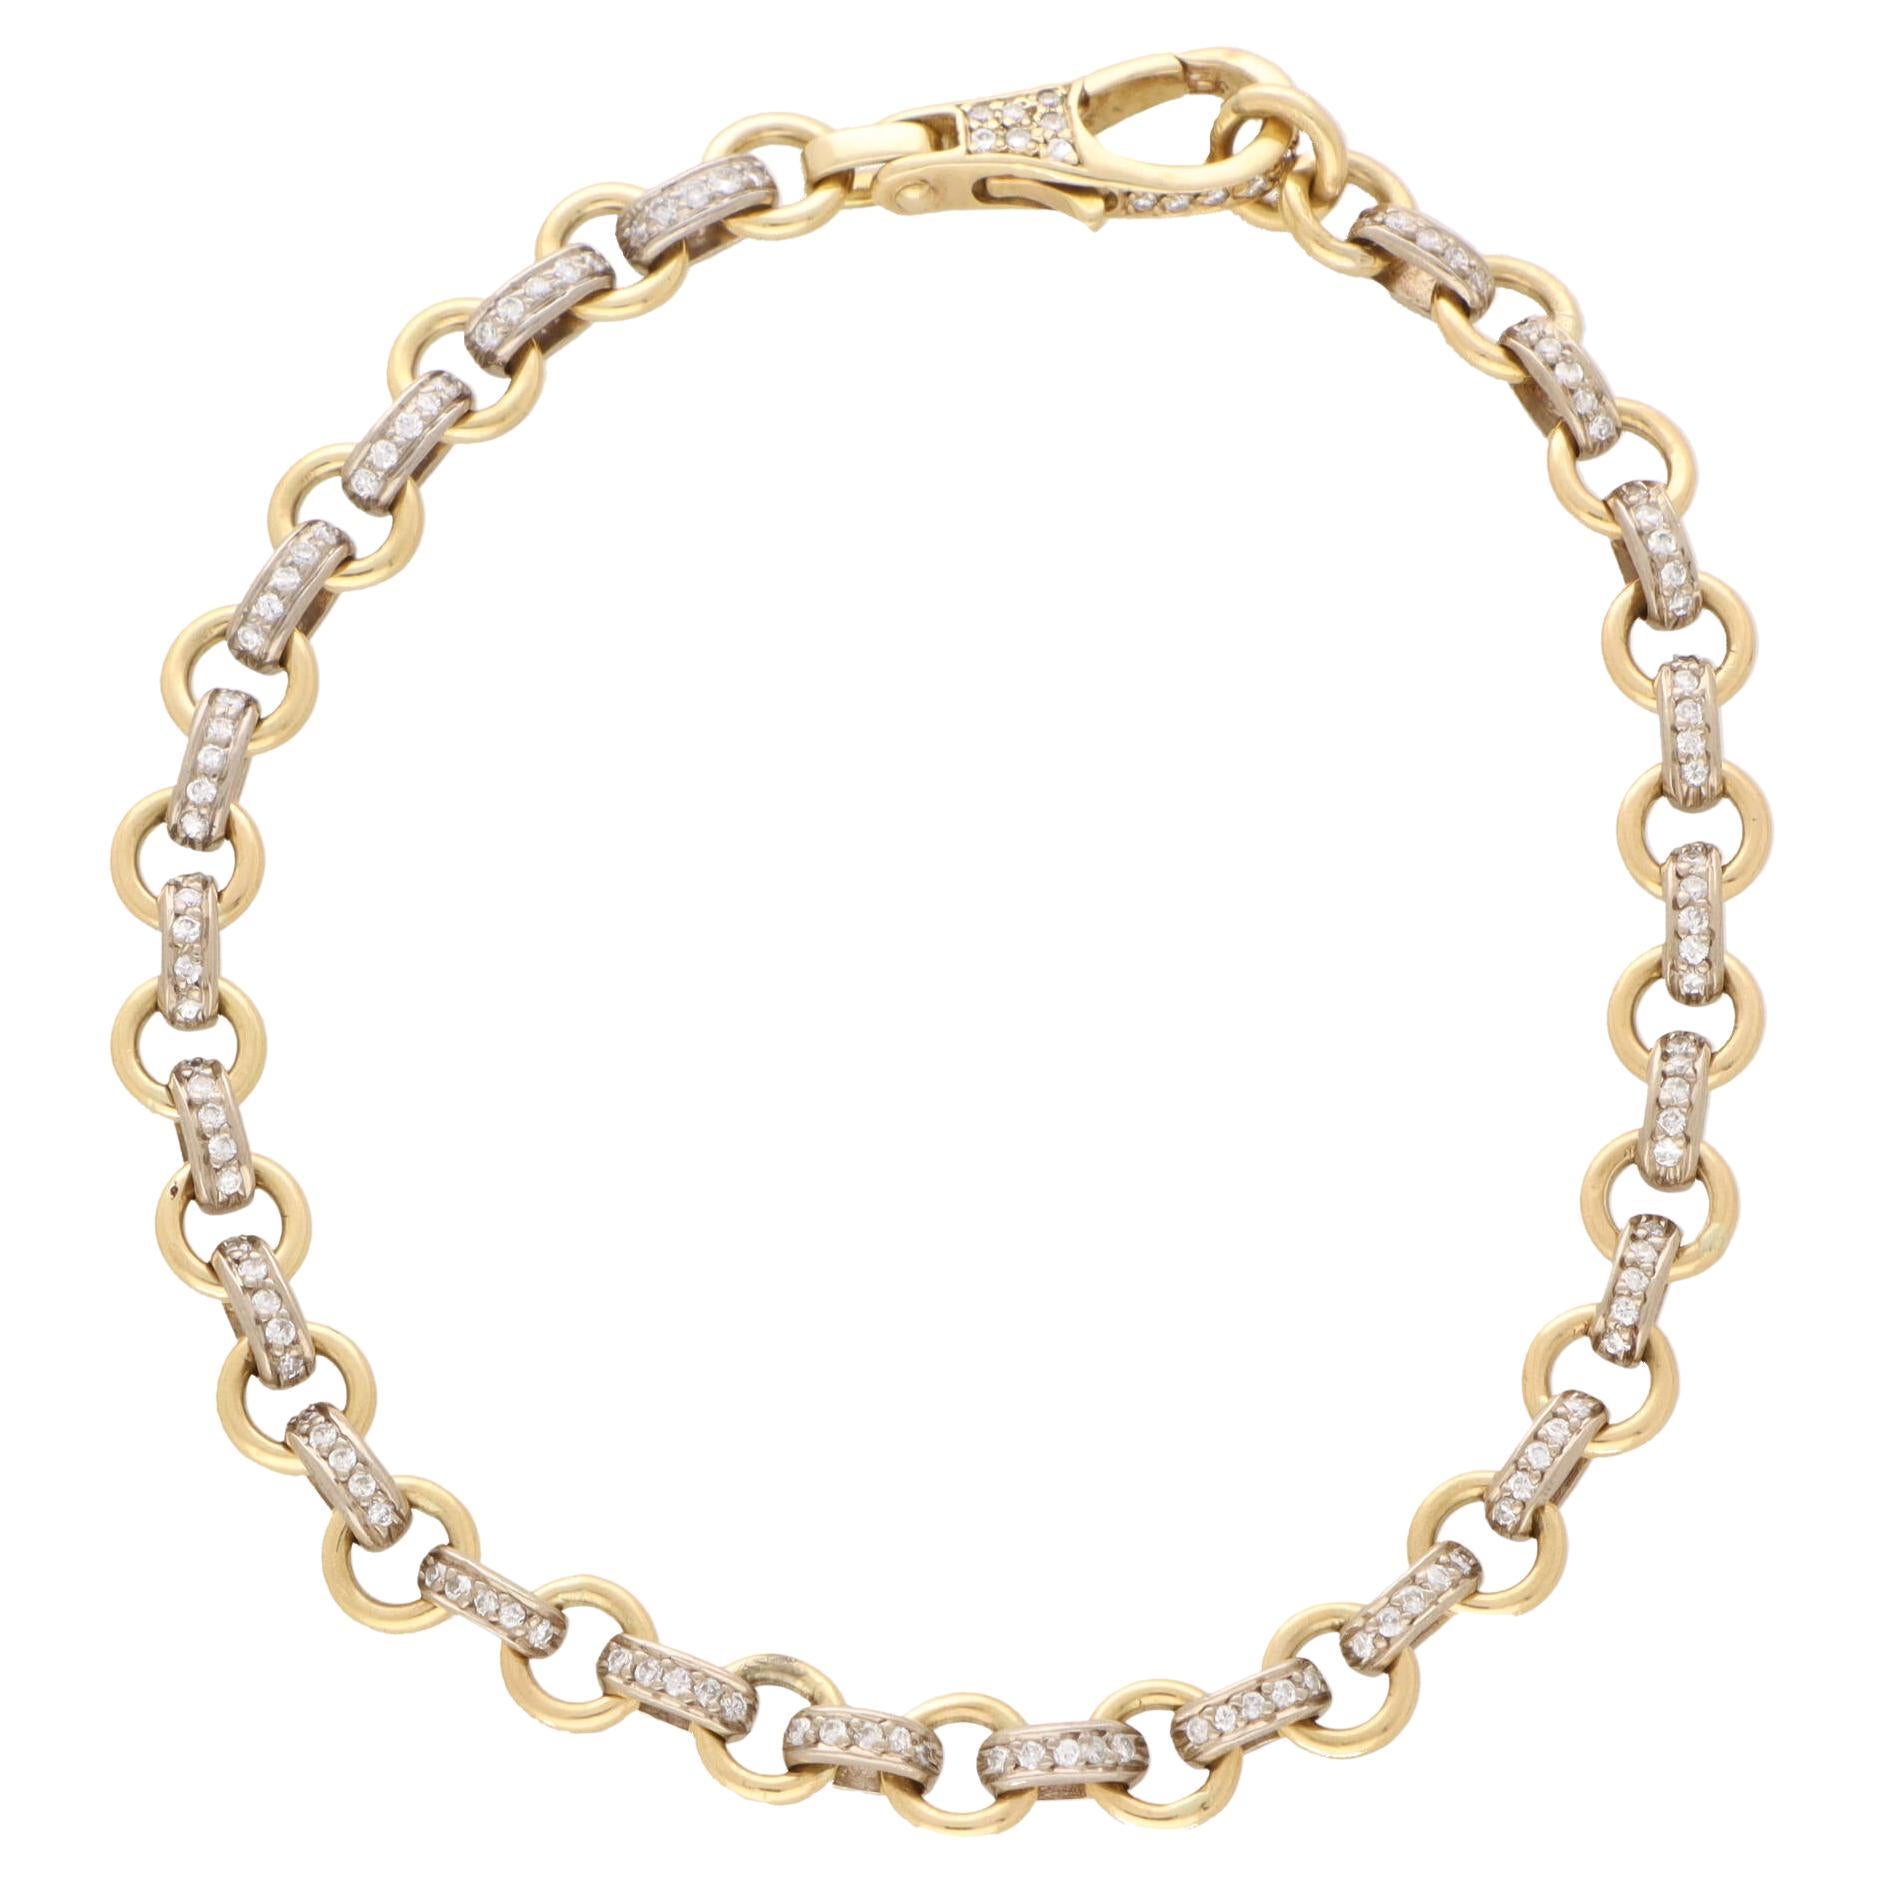 Vintage Retro Diamond Chain Link Bracelet in 19k Yellow and White Gold